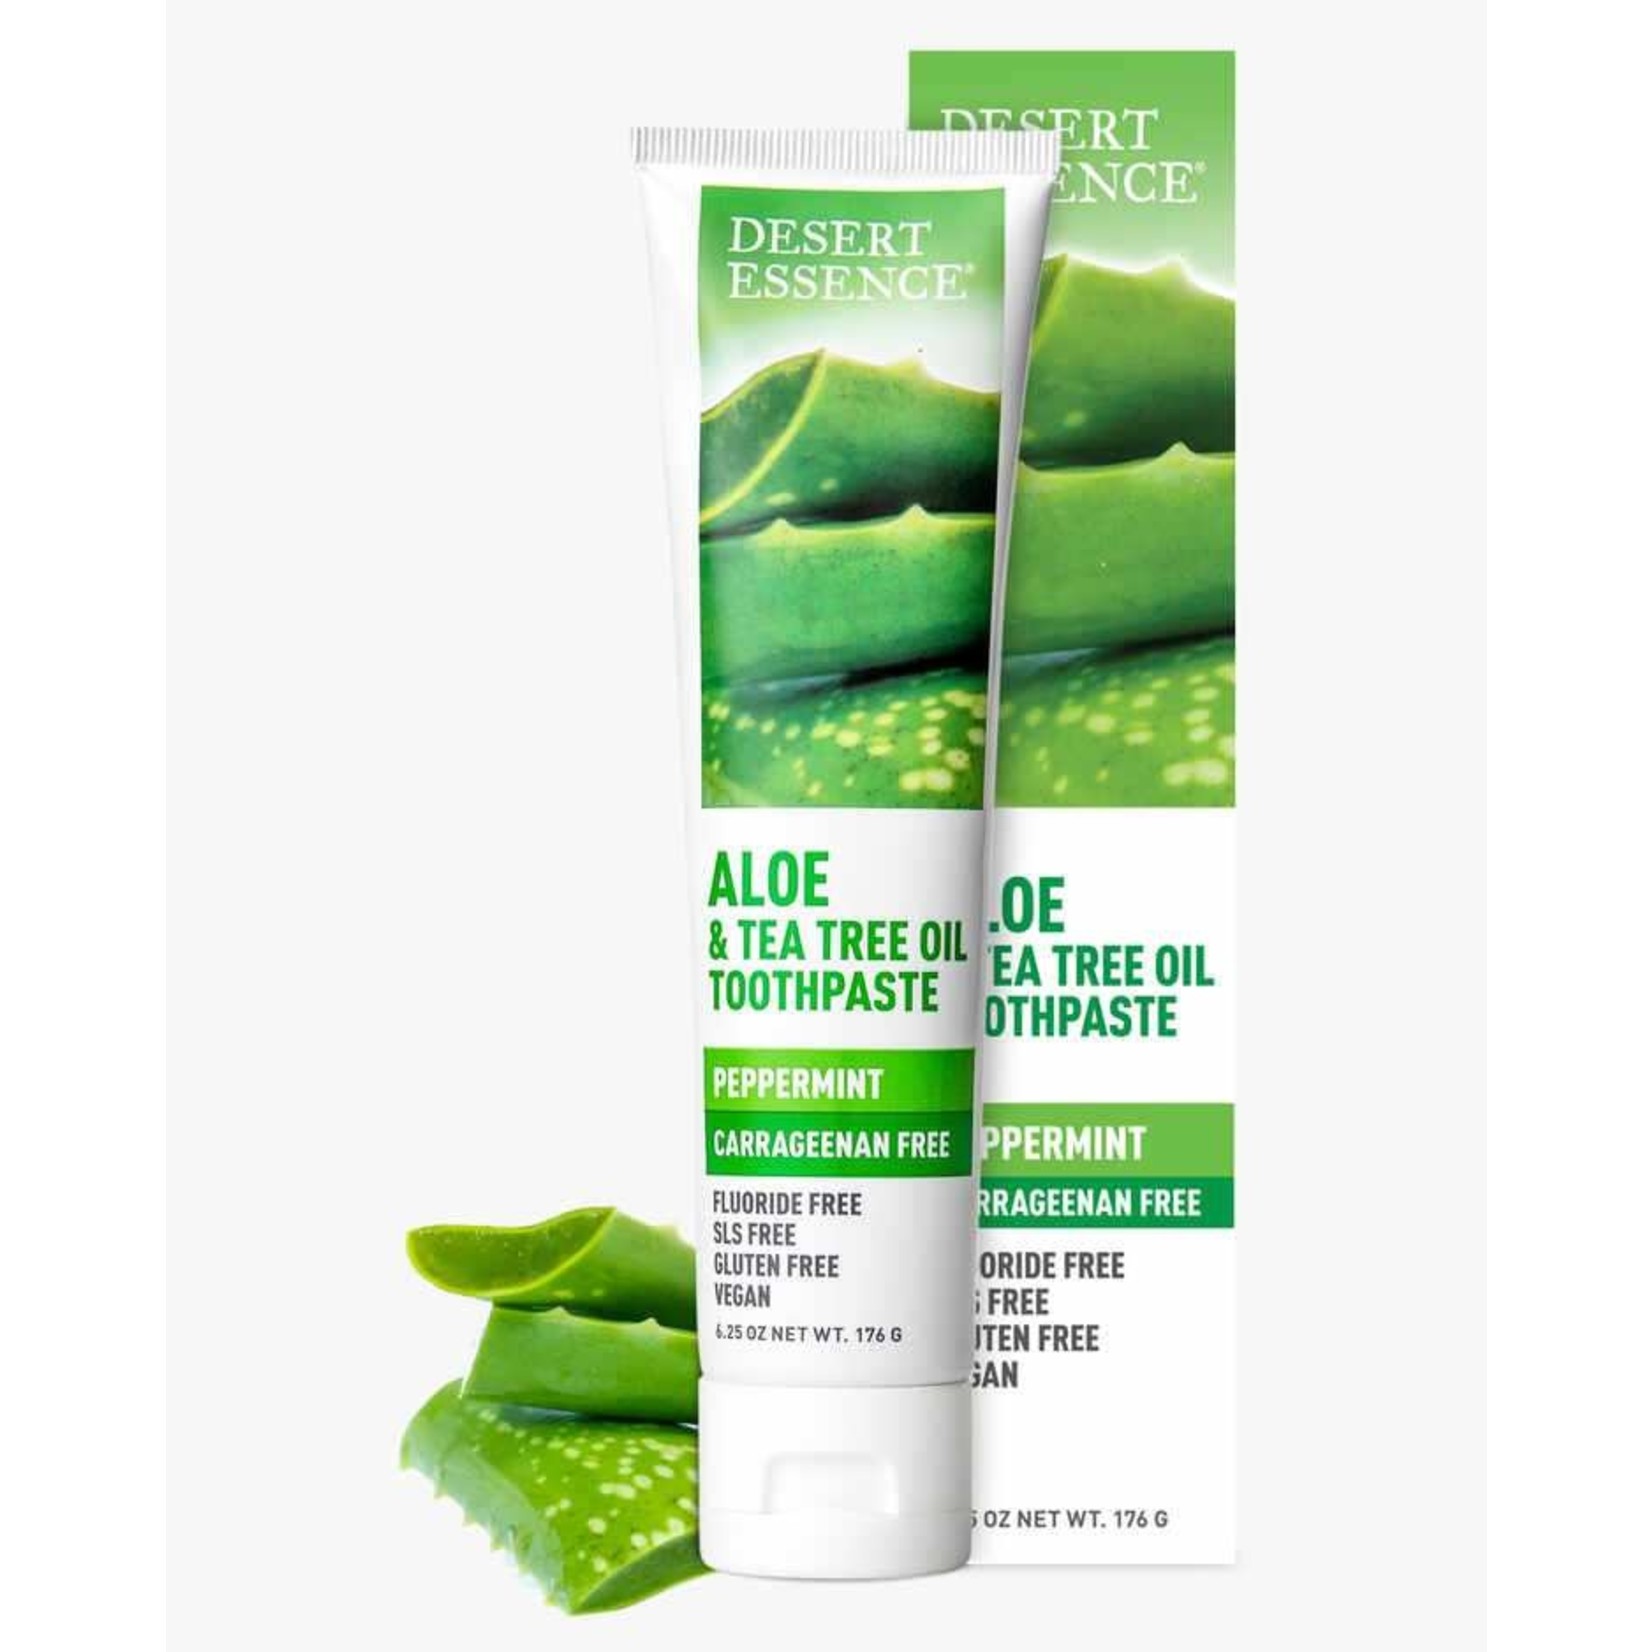 Desert Essence Desert Essence - Toothpaste Aloe & Tea Tree Oil - 6.5 oz